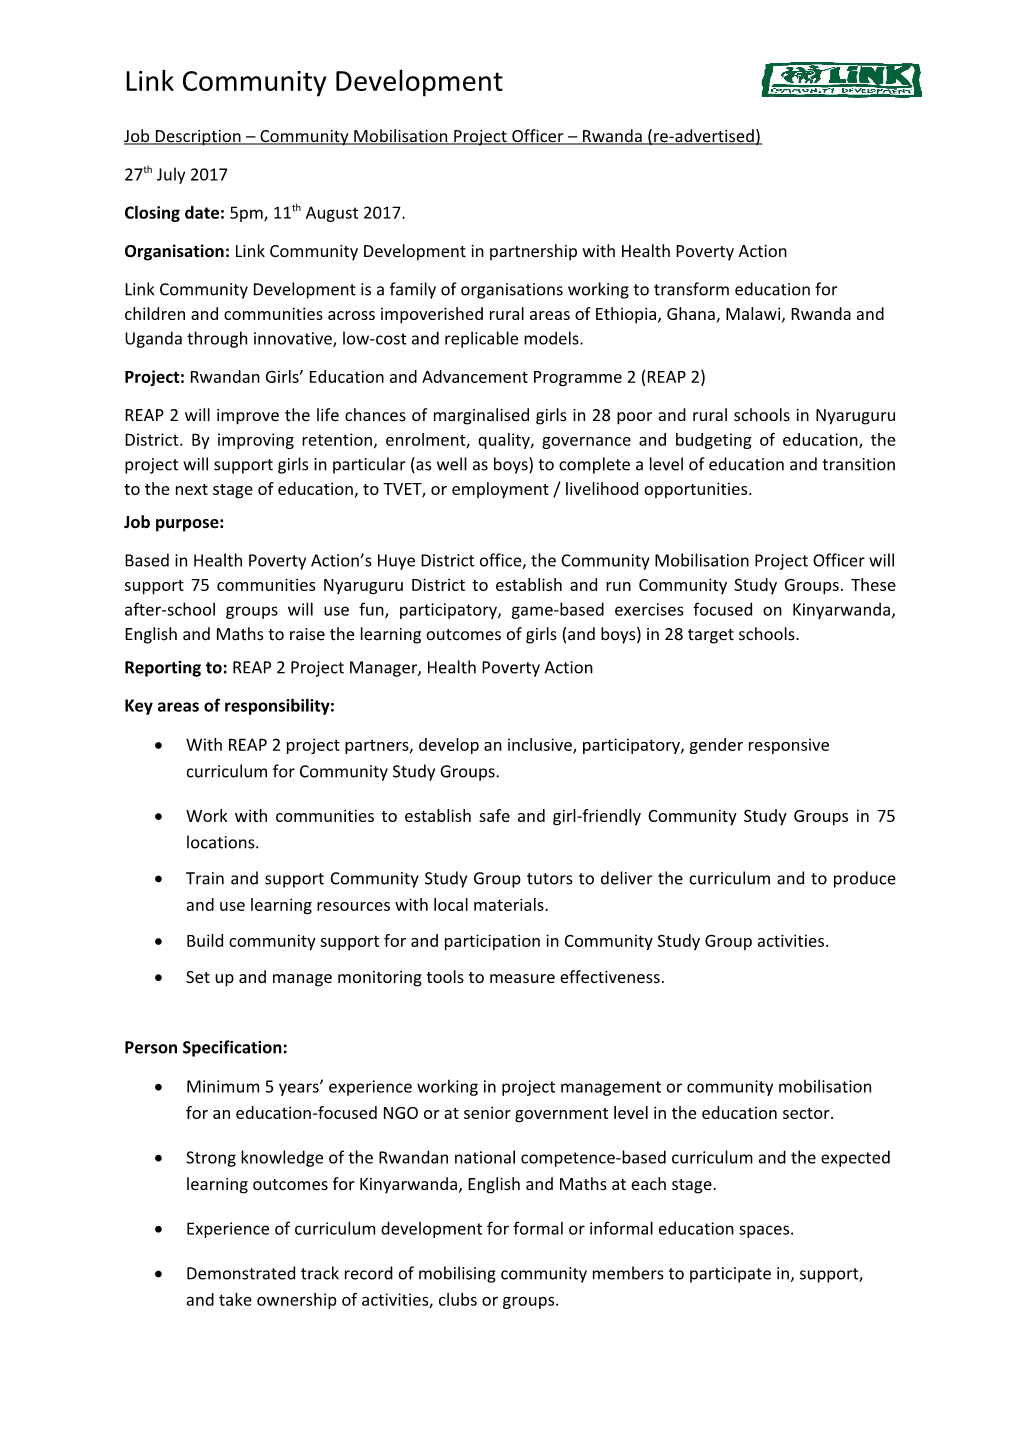 Job Description Community Mobilisation Project Officer Rwanda (Re-Advertised)